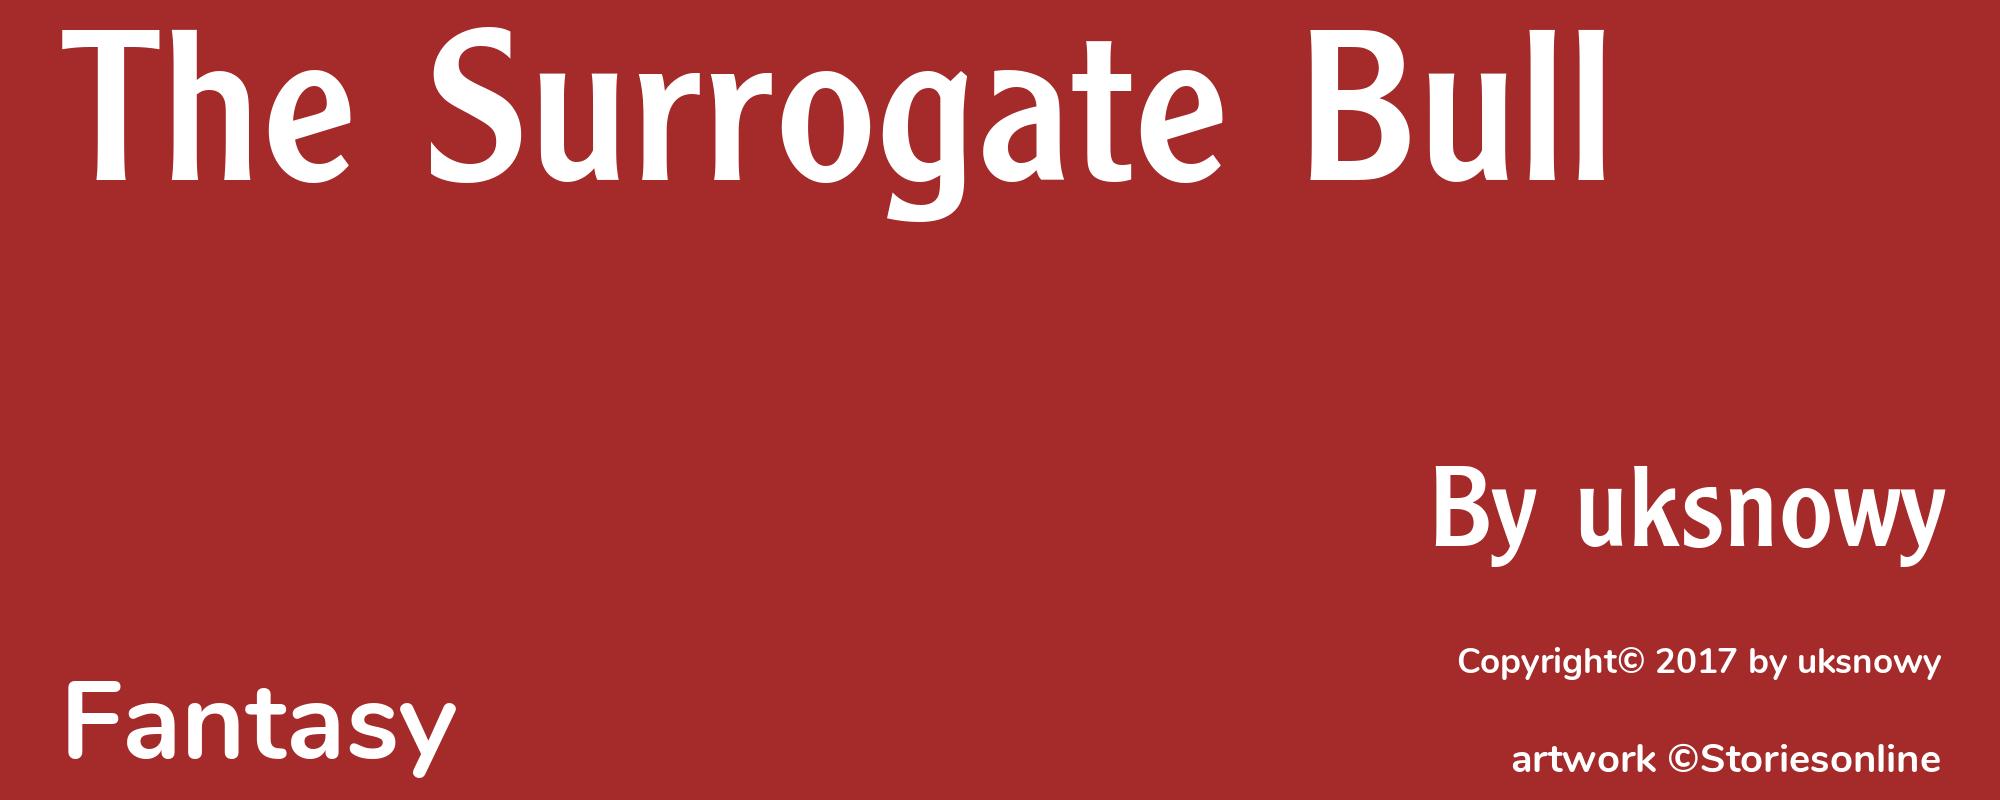 The Surrogate Bull - Cover